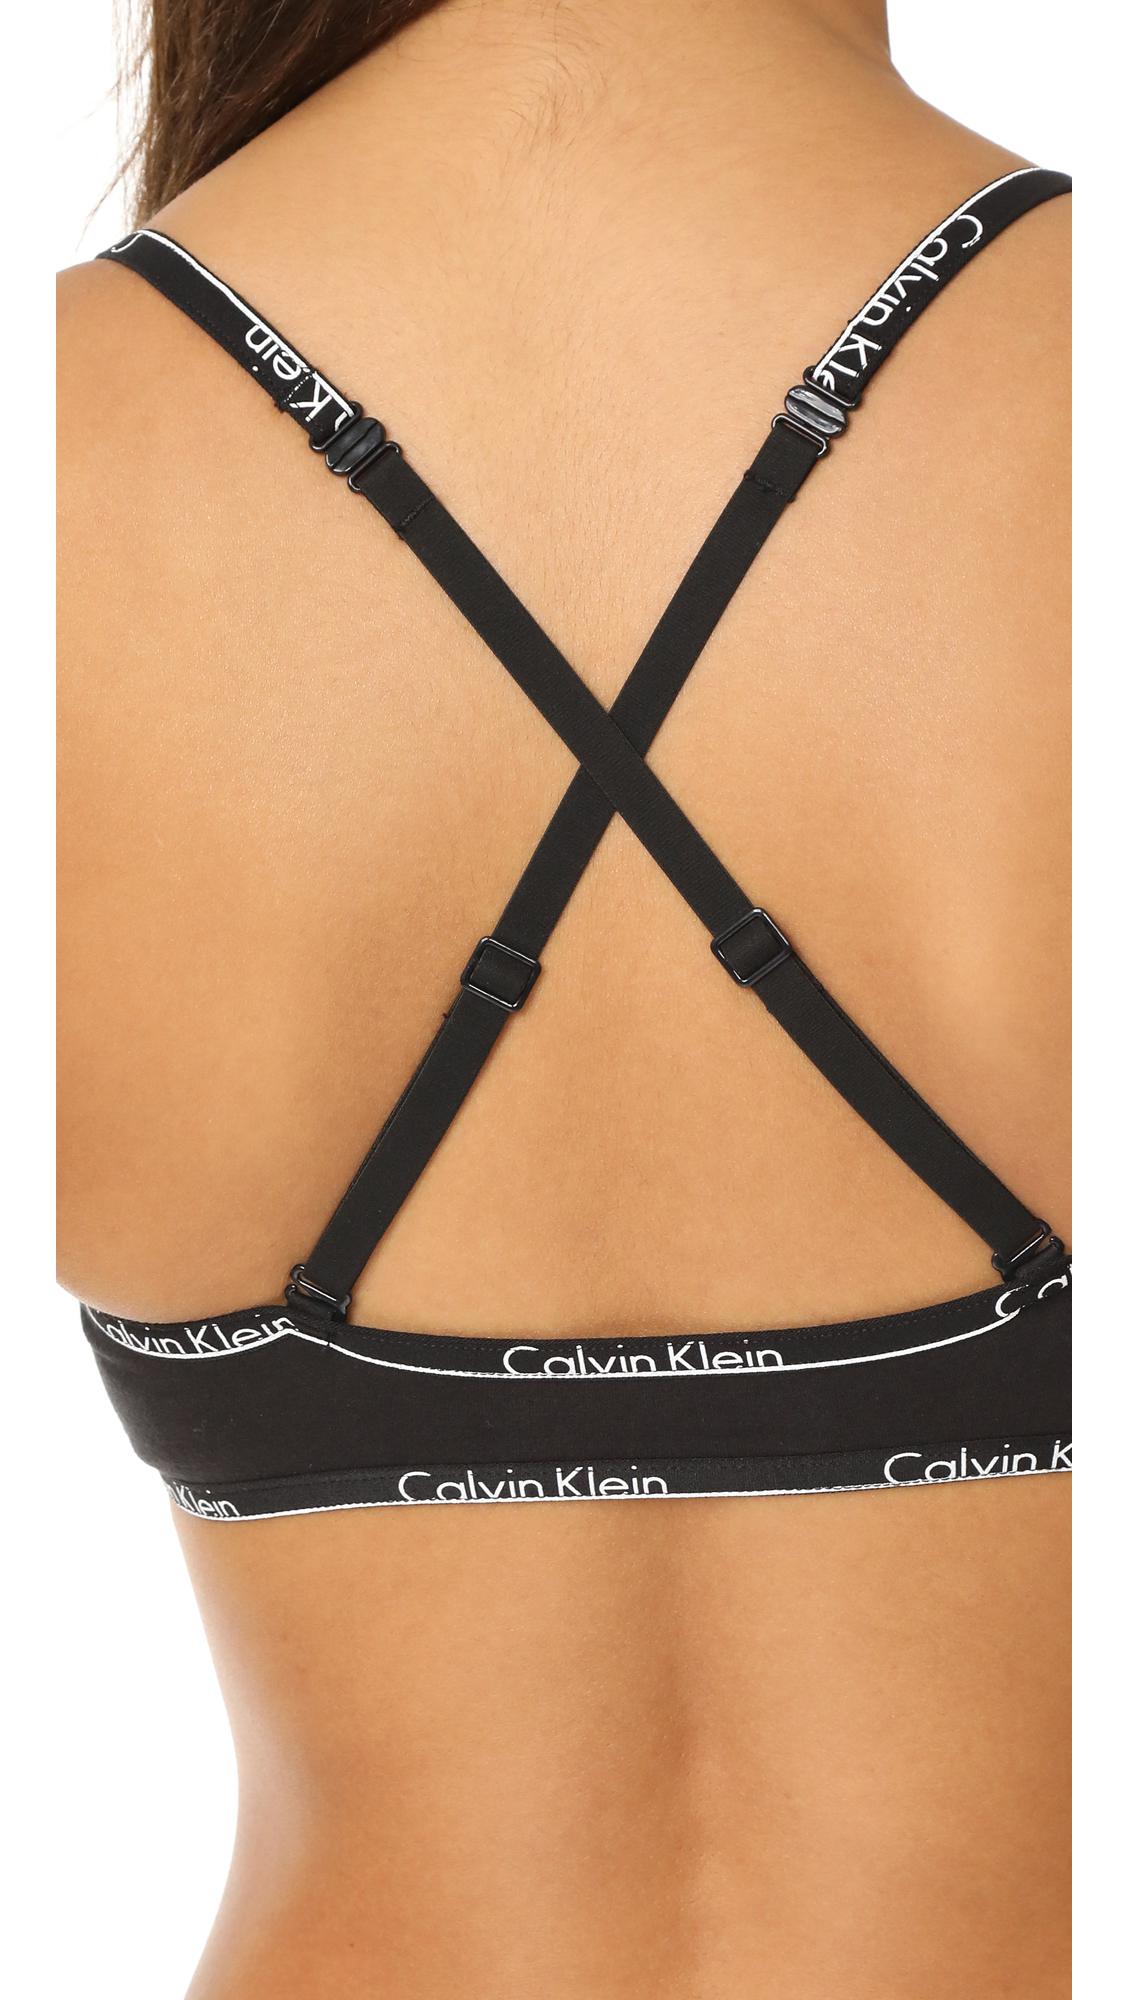 Calvin Klein Black Women's Medallion Lace Unlined Triangle Bra